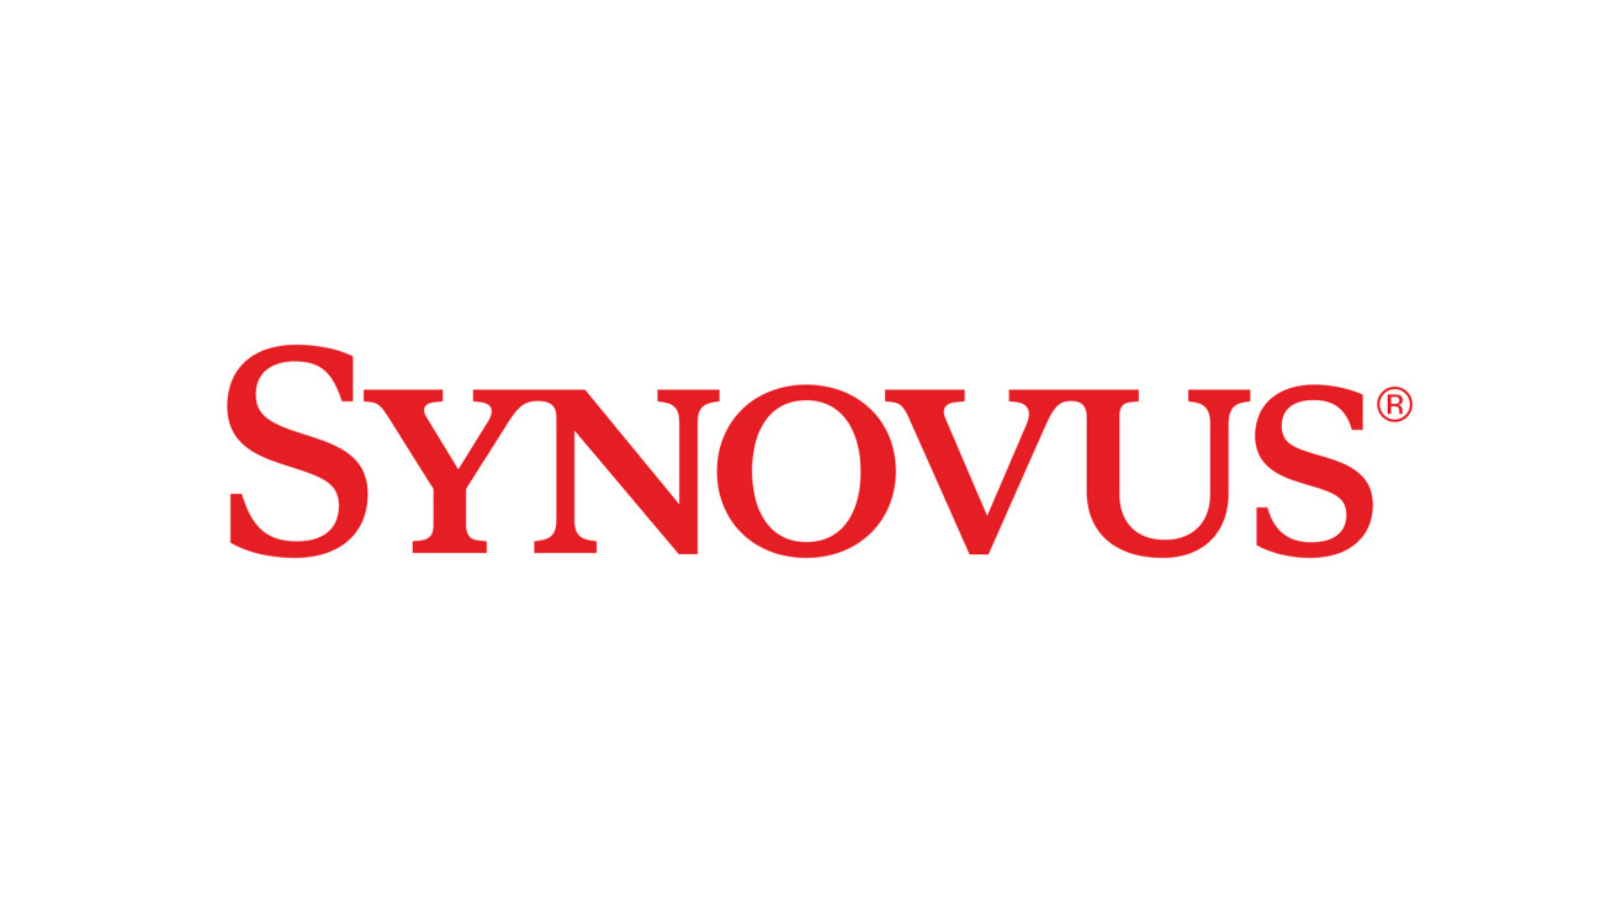 SYNOVUS